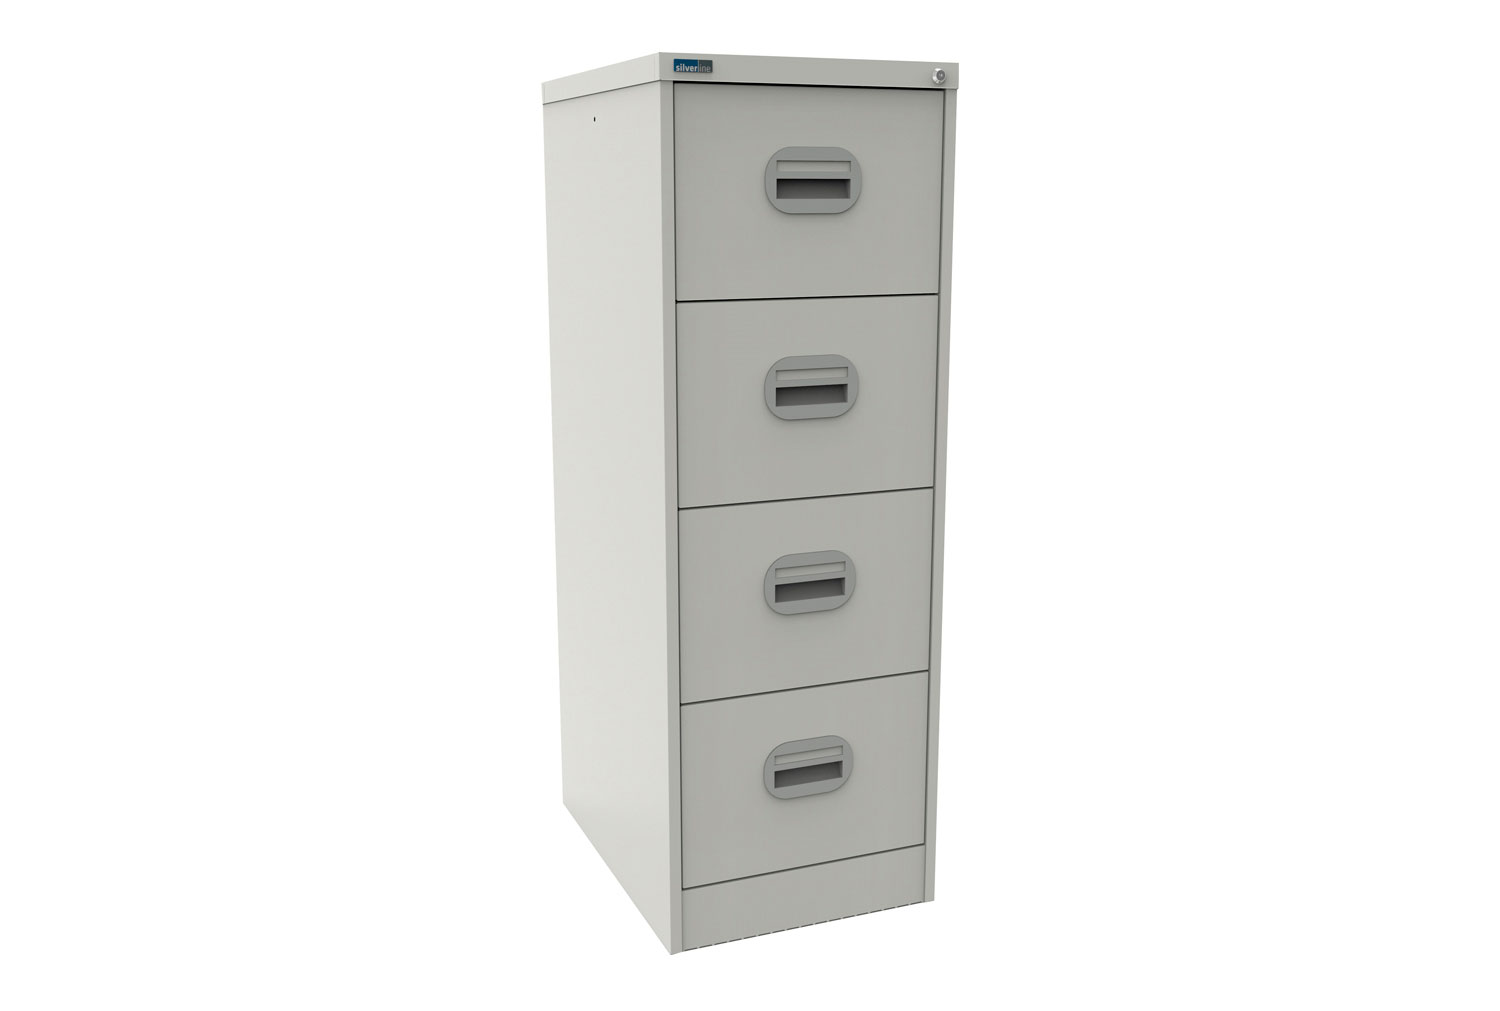 Silverline Kontrax 4 Drawer Filing Cabinet, 4 Drawer - 46wx62dx132h (cm), White Semi Gloss